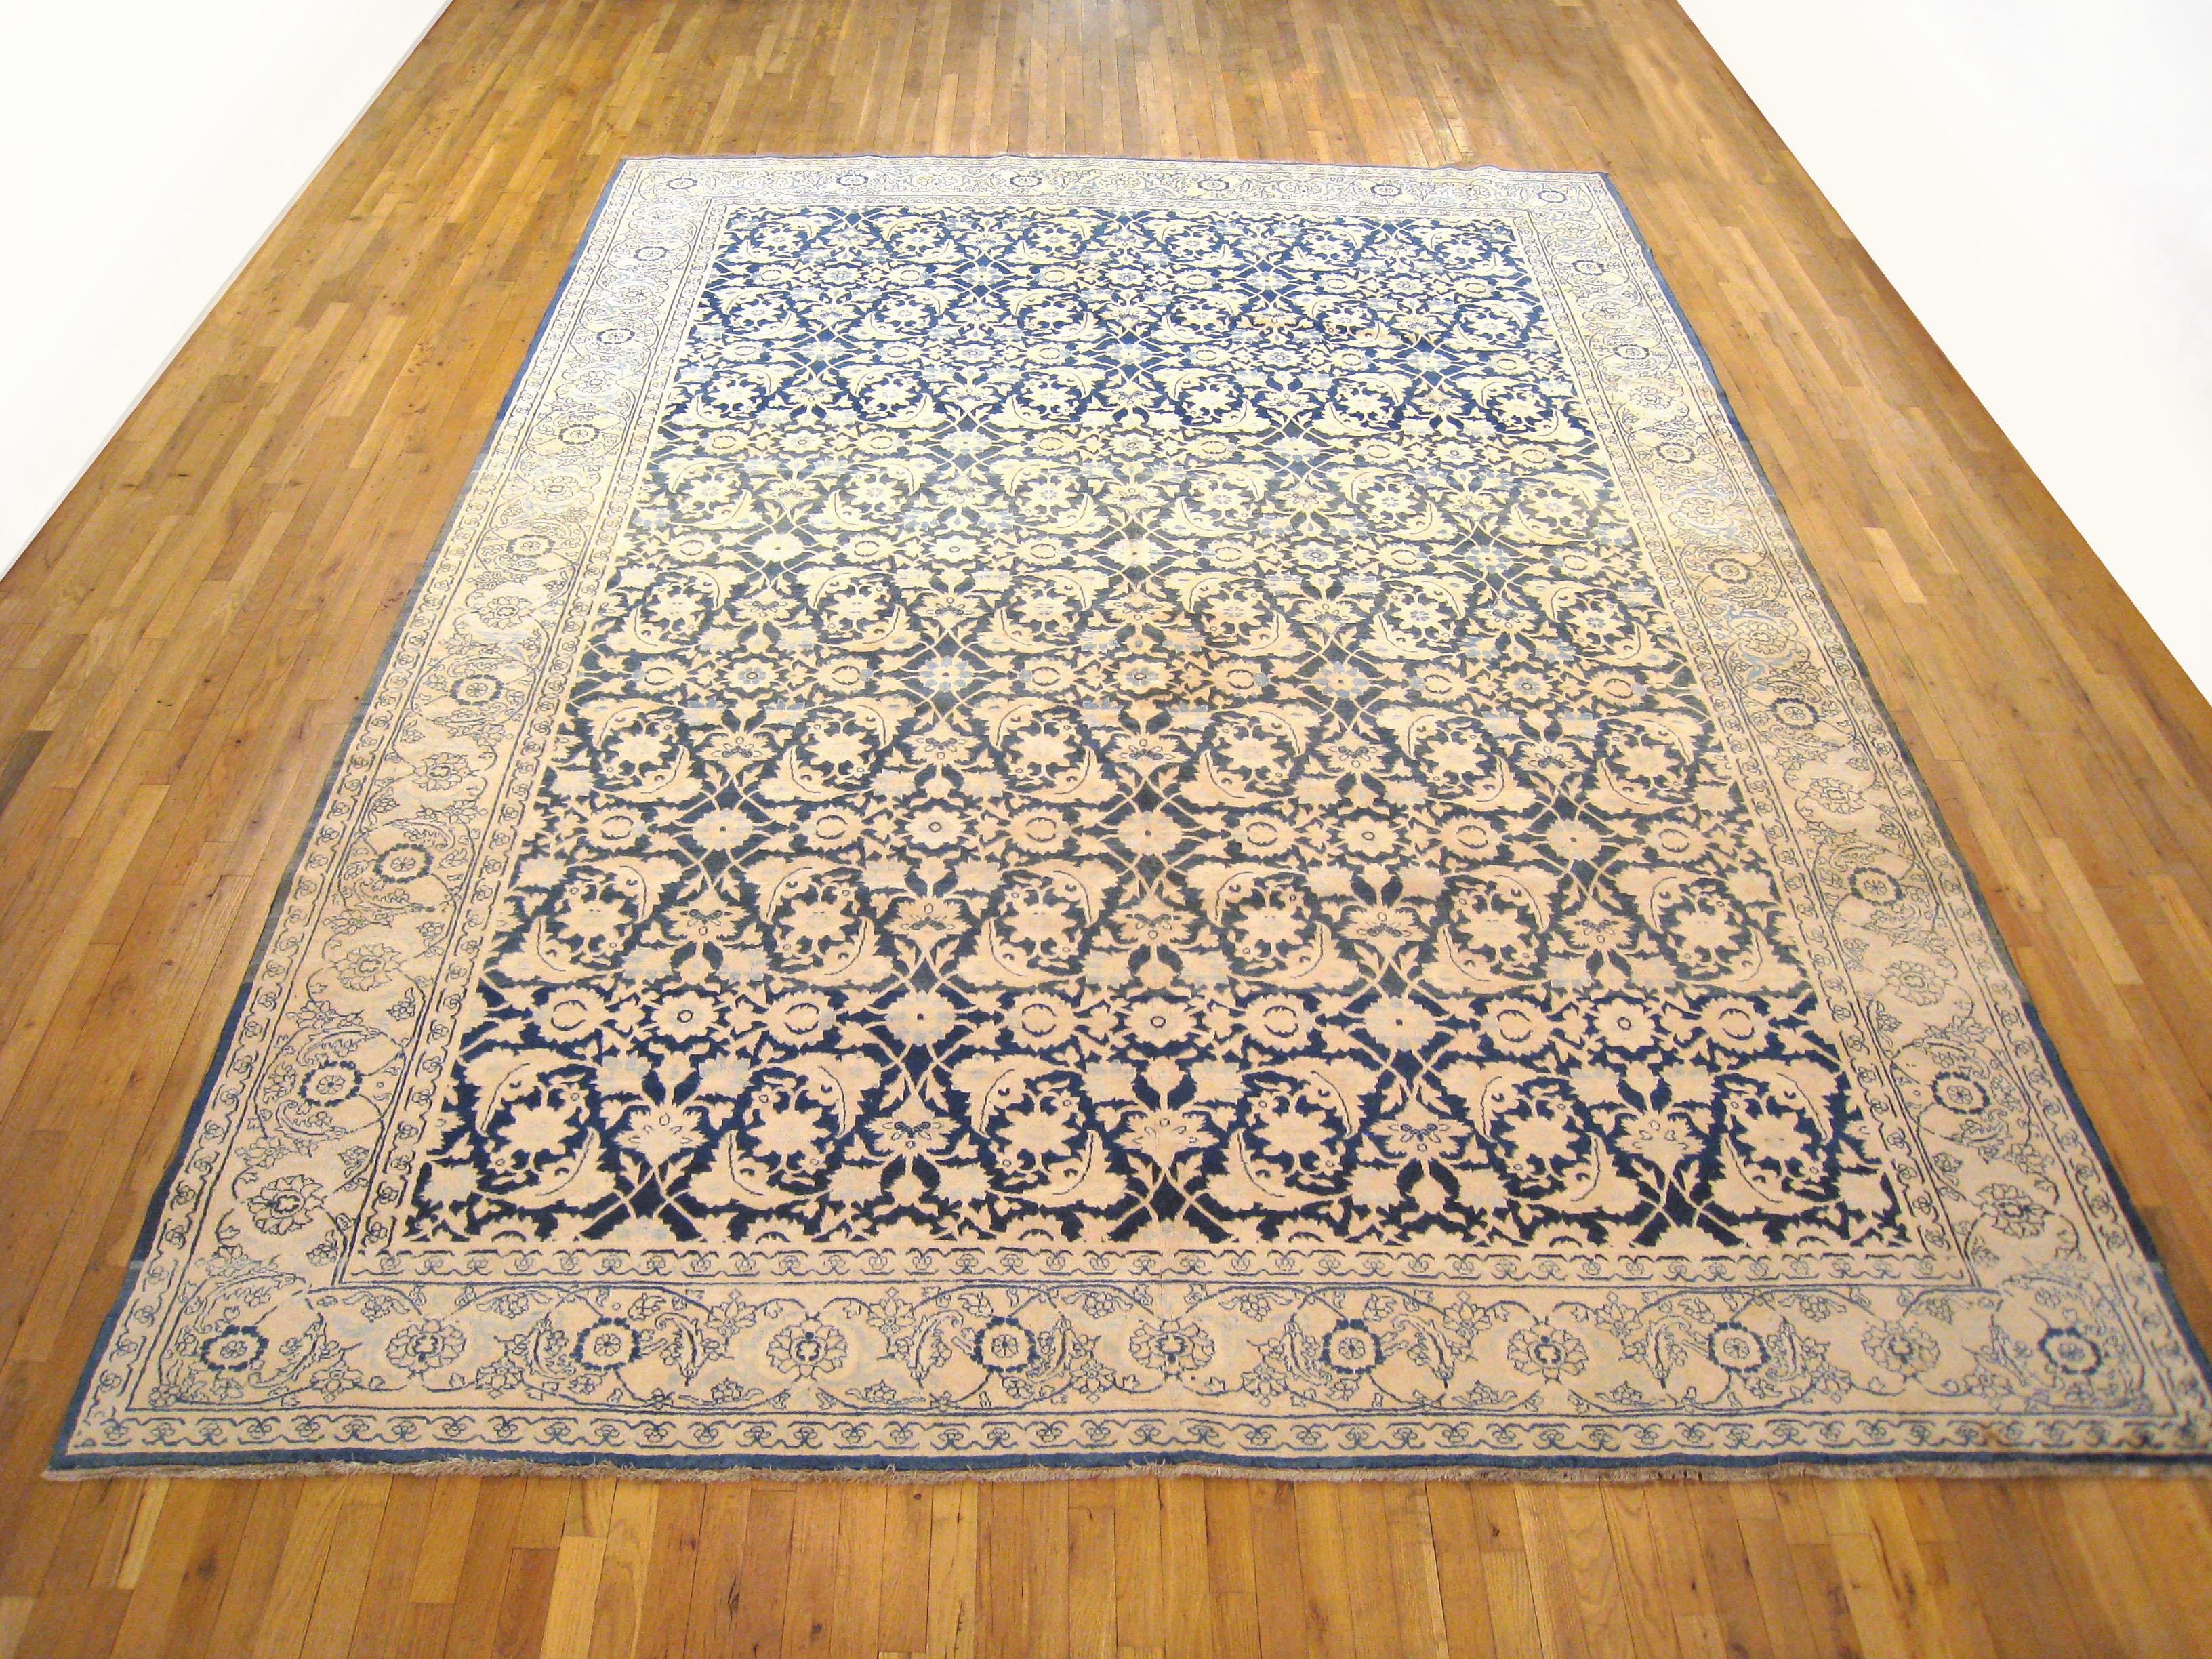 Antique Perisan Tabriz oriental carpet, circa 1910, Room Sized

An antique Persian Tabriz oriental carpet, circa 1910. Size: 13'8